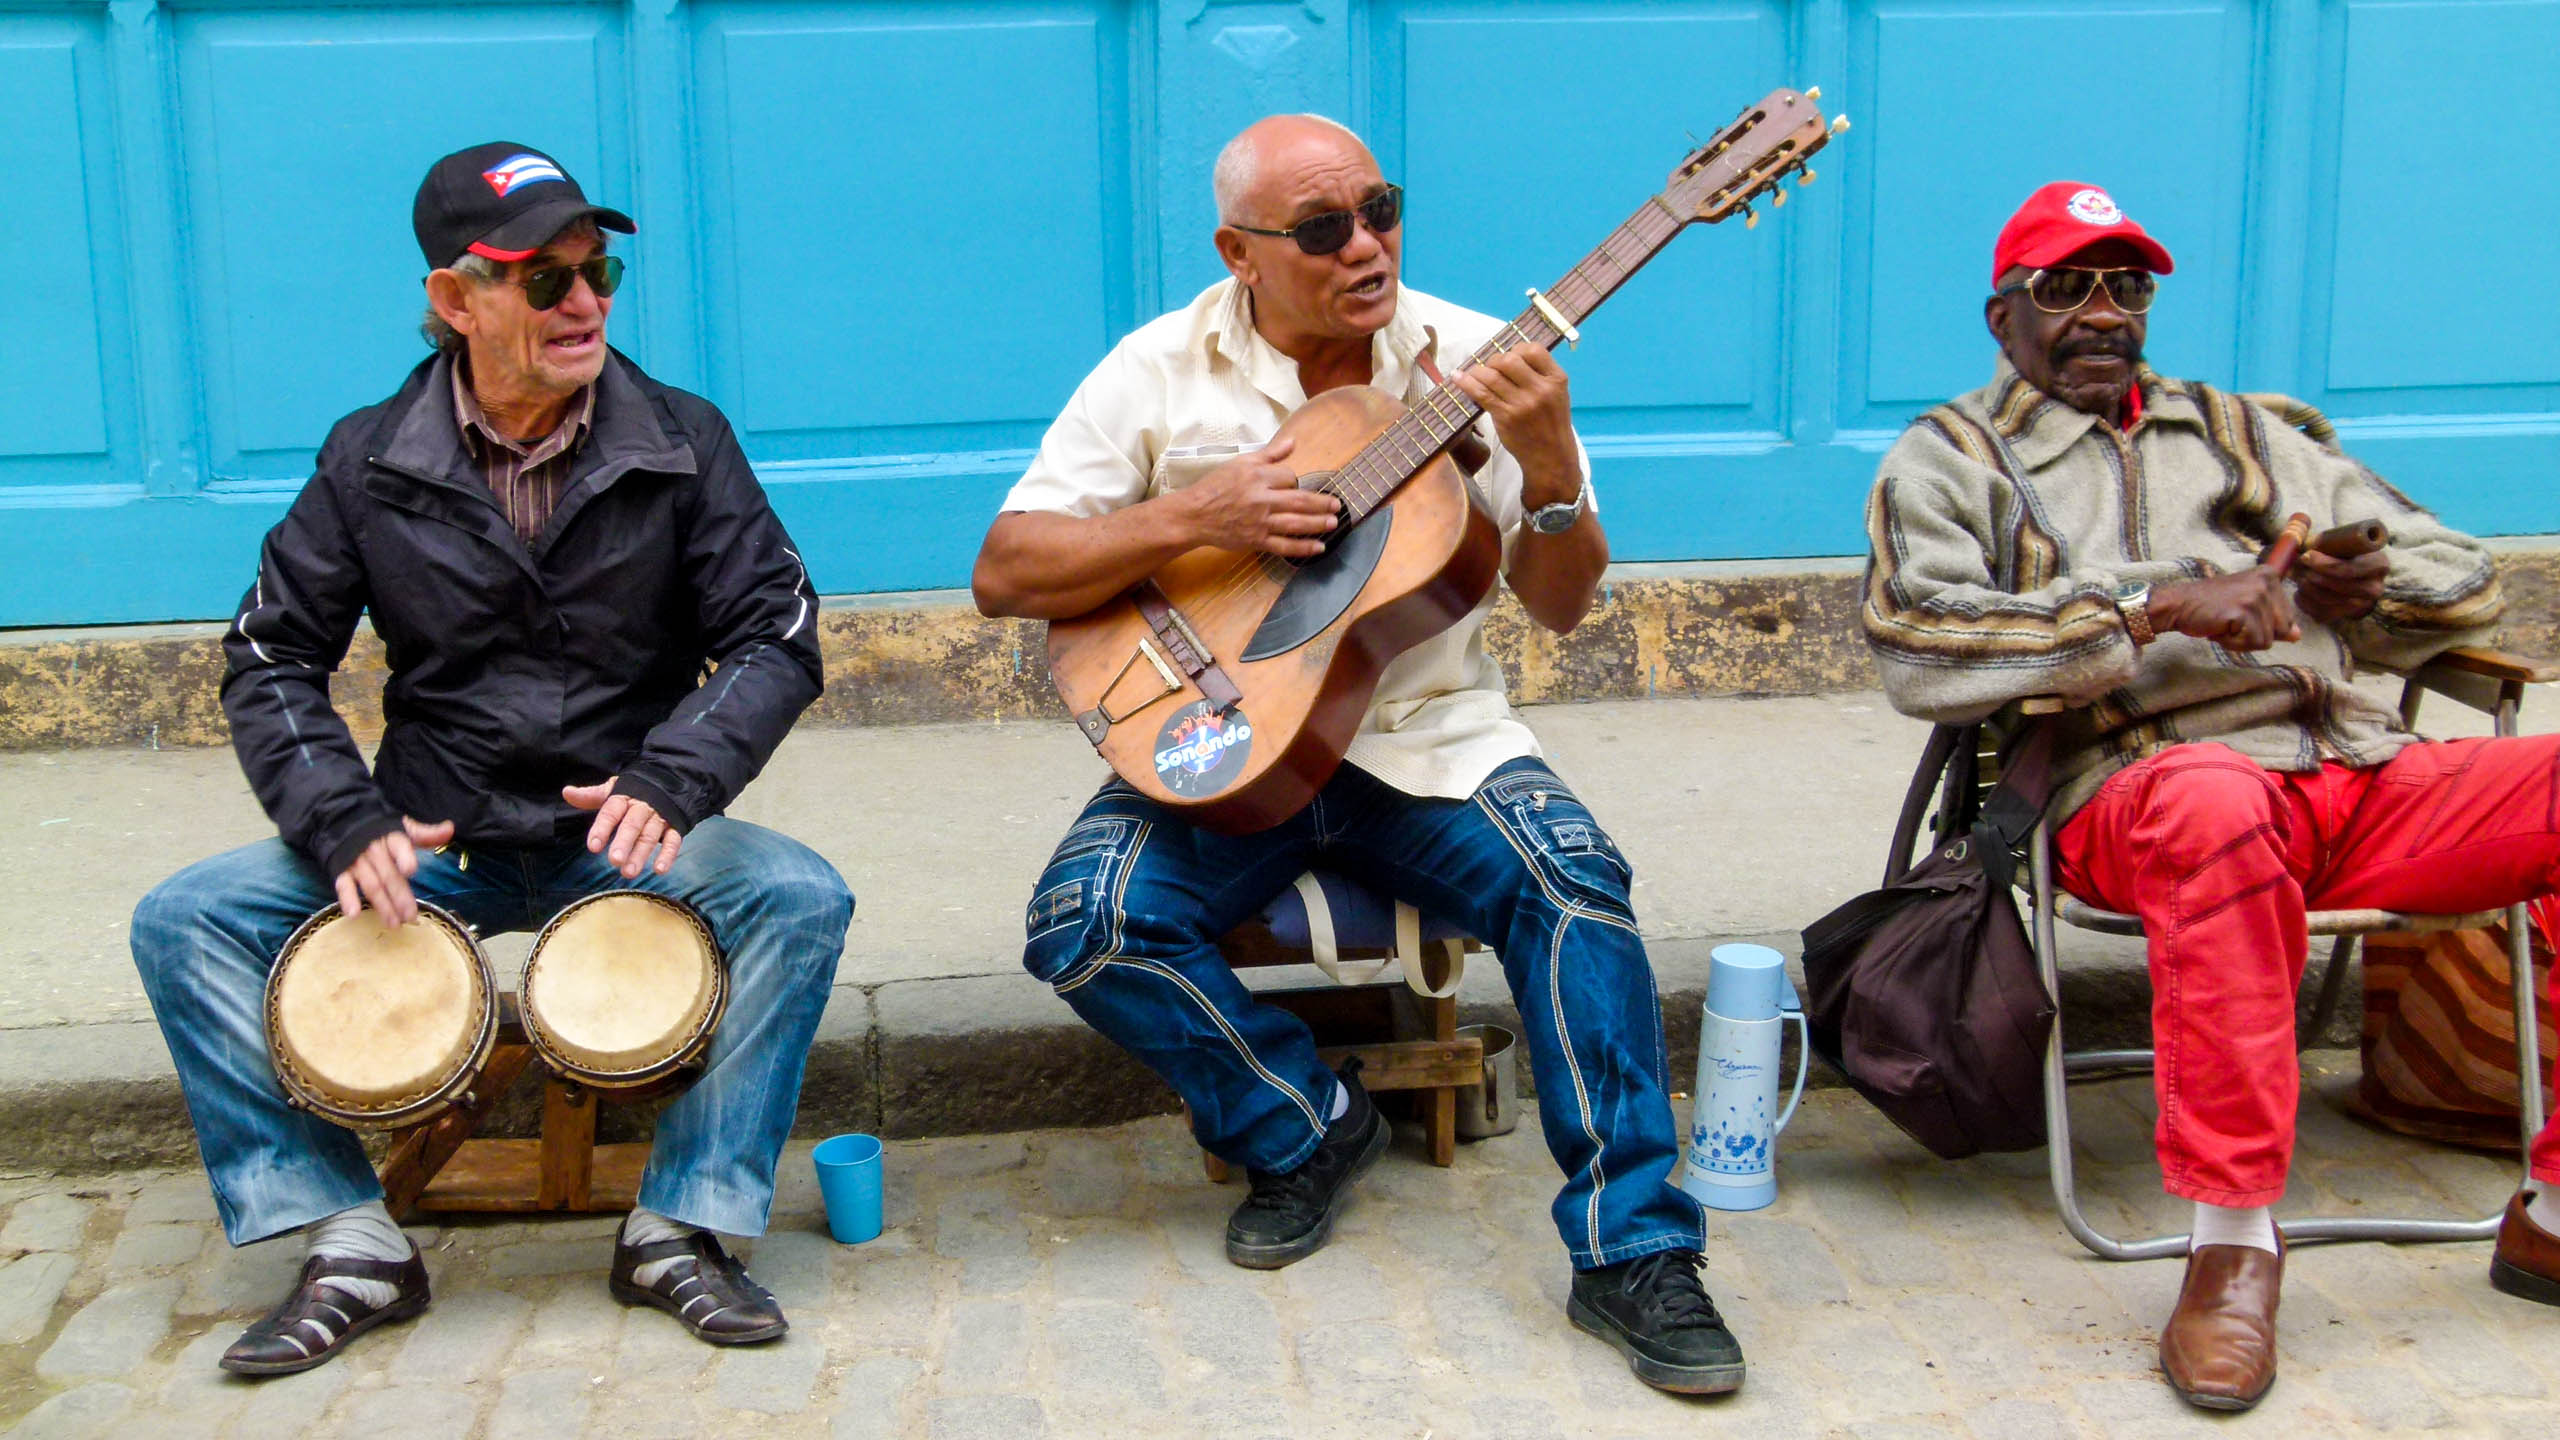 Men play instruments on Cuba street curb